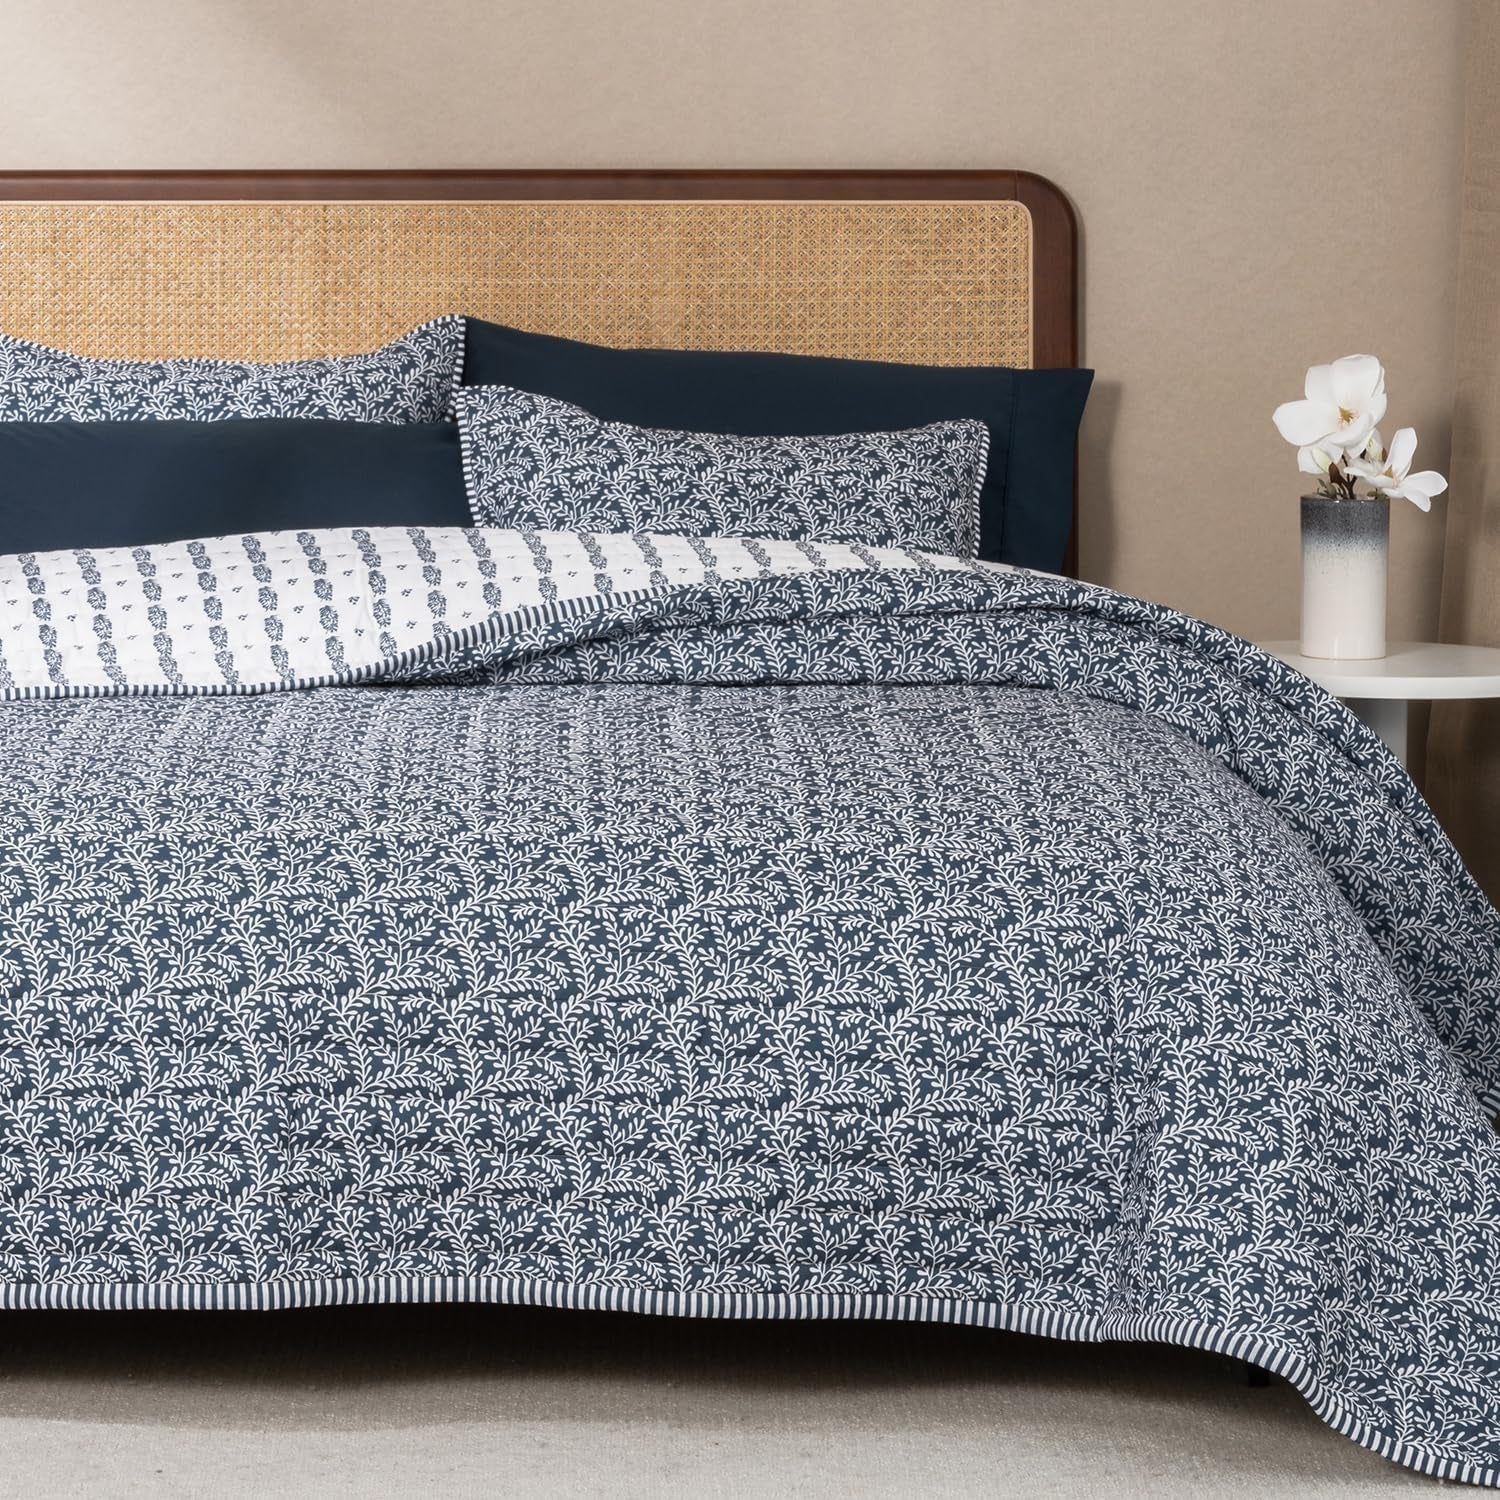 EVERGRACE Floral Printed Quilt Comforter Set King Size, 3 Pieces (1 Reversible Quilt Bedding Set, 2 Pillow Shams), Microfiber Lightweight Coverlet Bedspread for All Seasons, Sage Green, 108"X96"